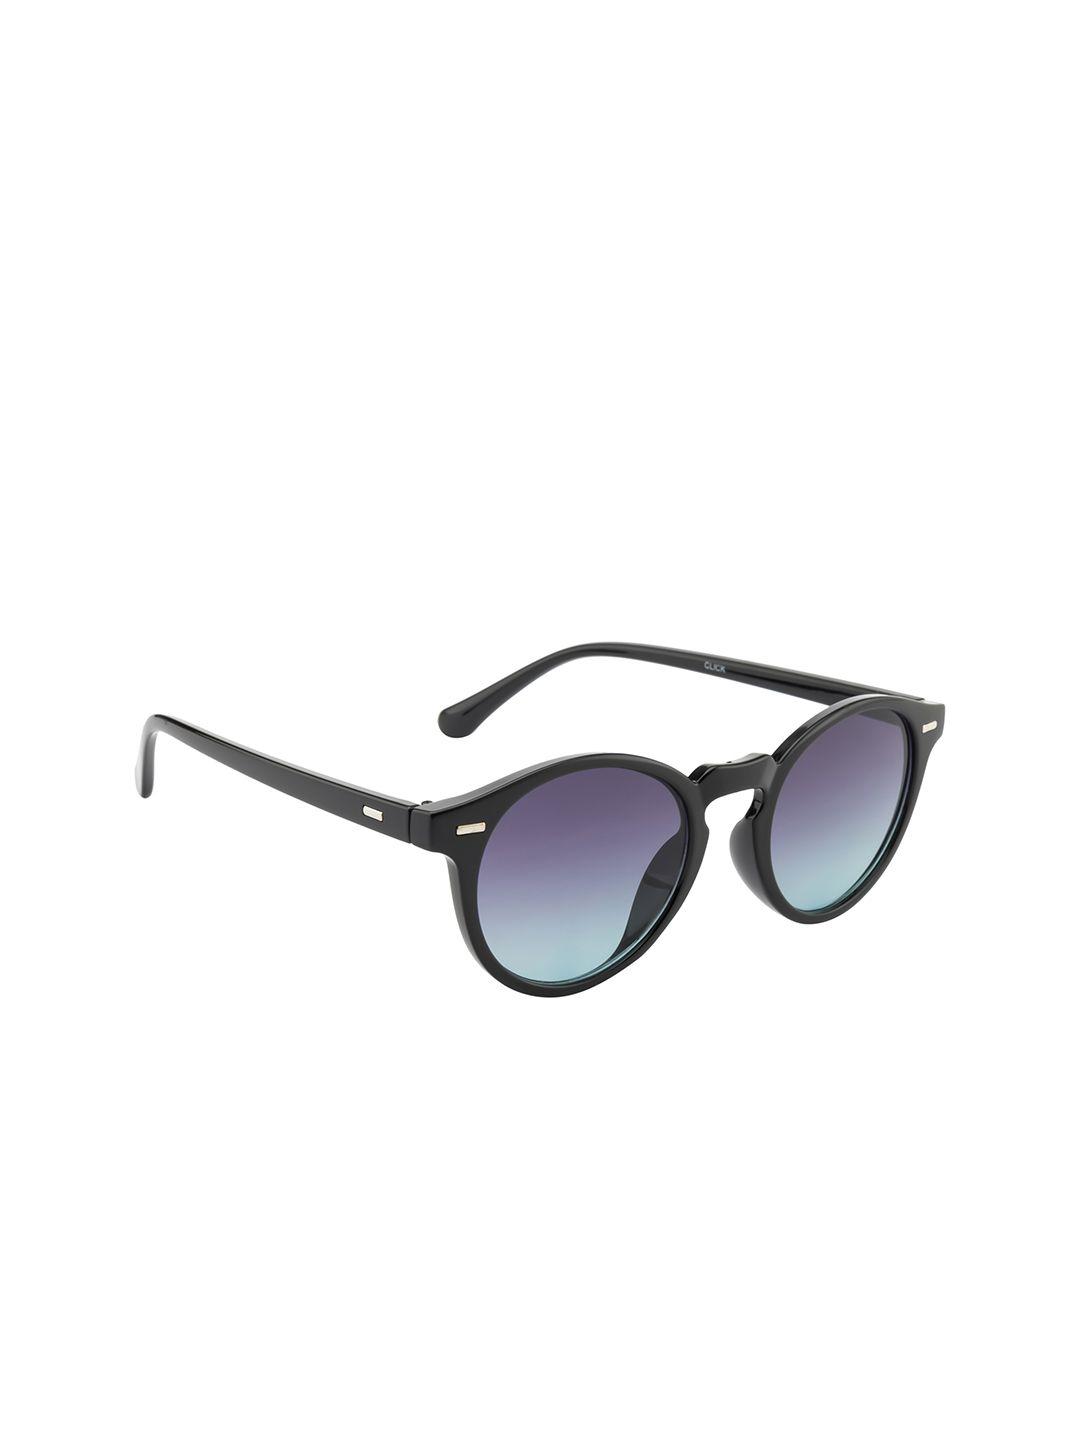 mast-&-harbour-full-rim-round-sunglasses-with-uv-protected-lens-mh-m25150